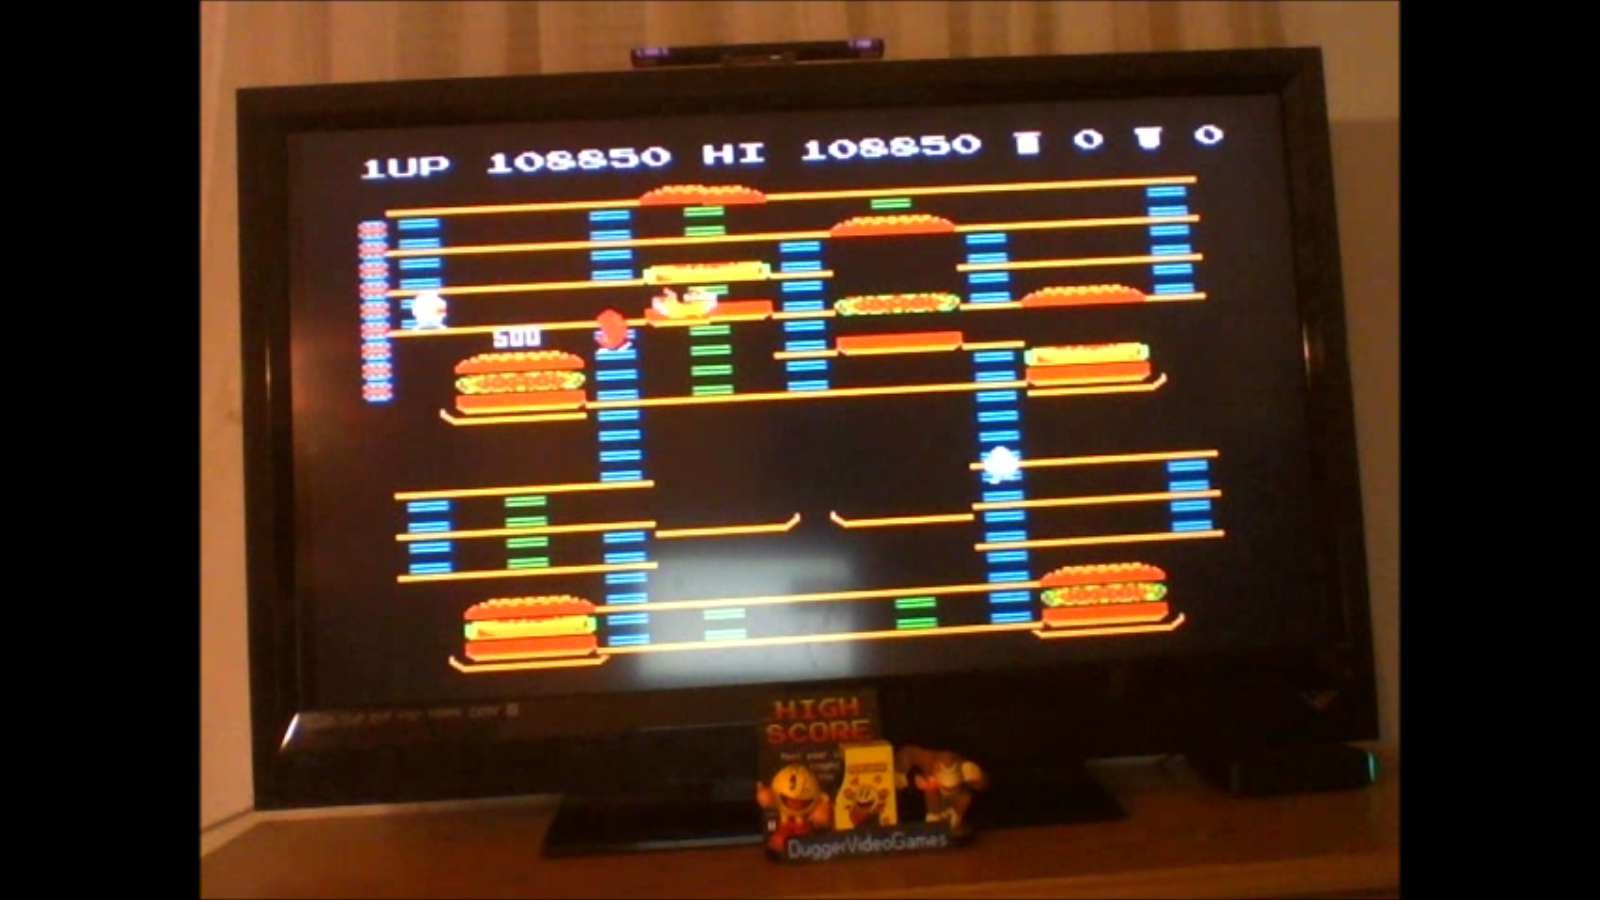 DuggerVideoGames: BurgerTime (NES/Famicom Emulated) 108,850 points on 2017-02-01 18:03:28